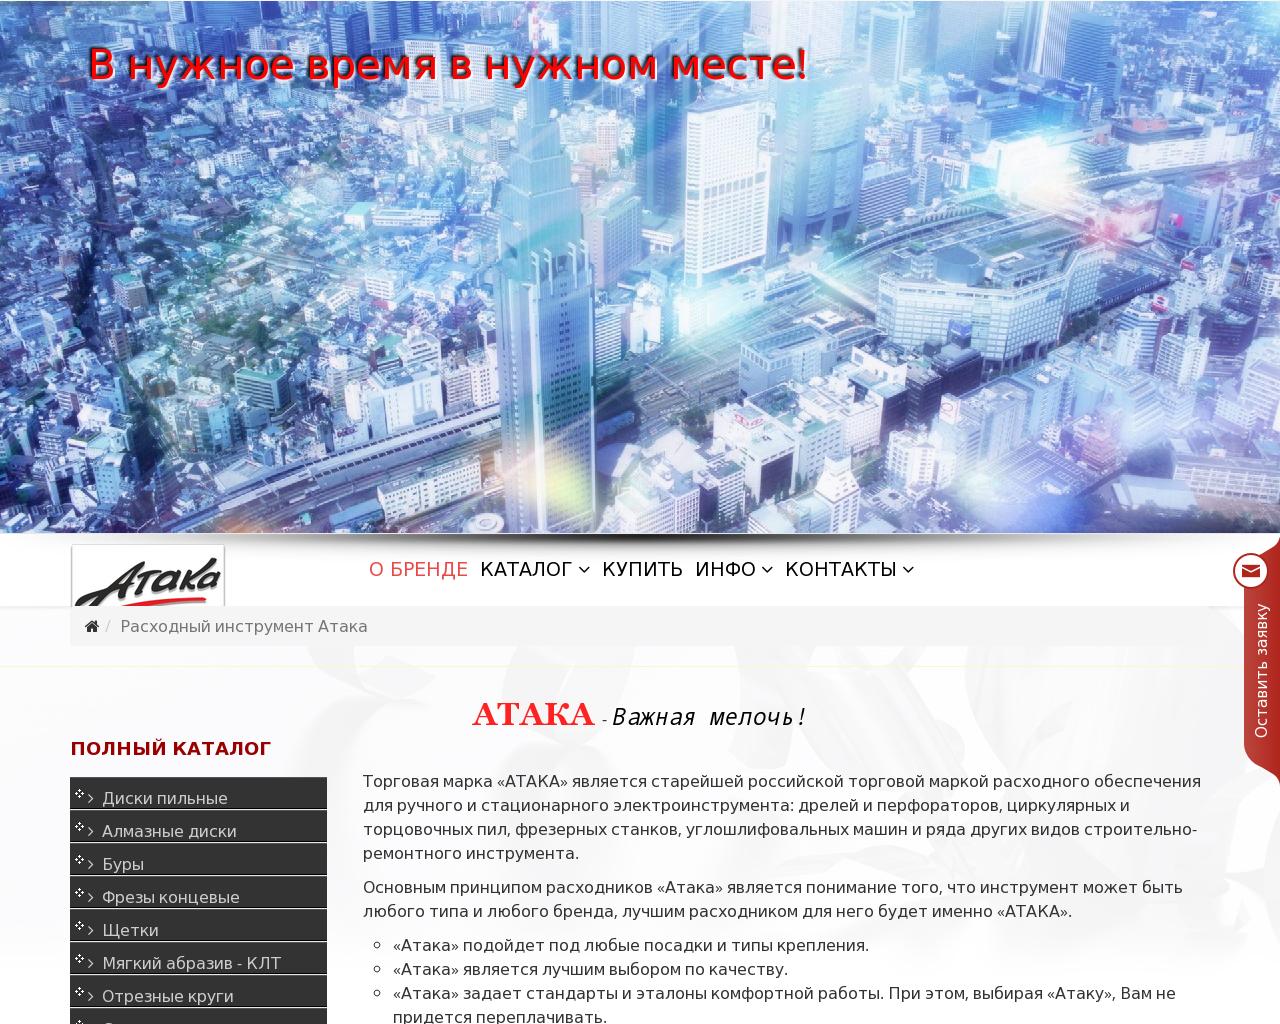 Изображение сайта ataka.ru в разрешении 1280x1024